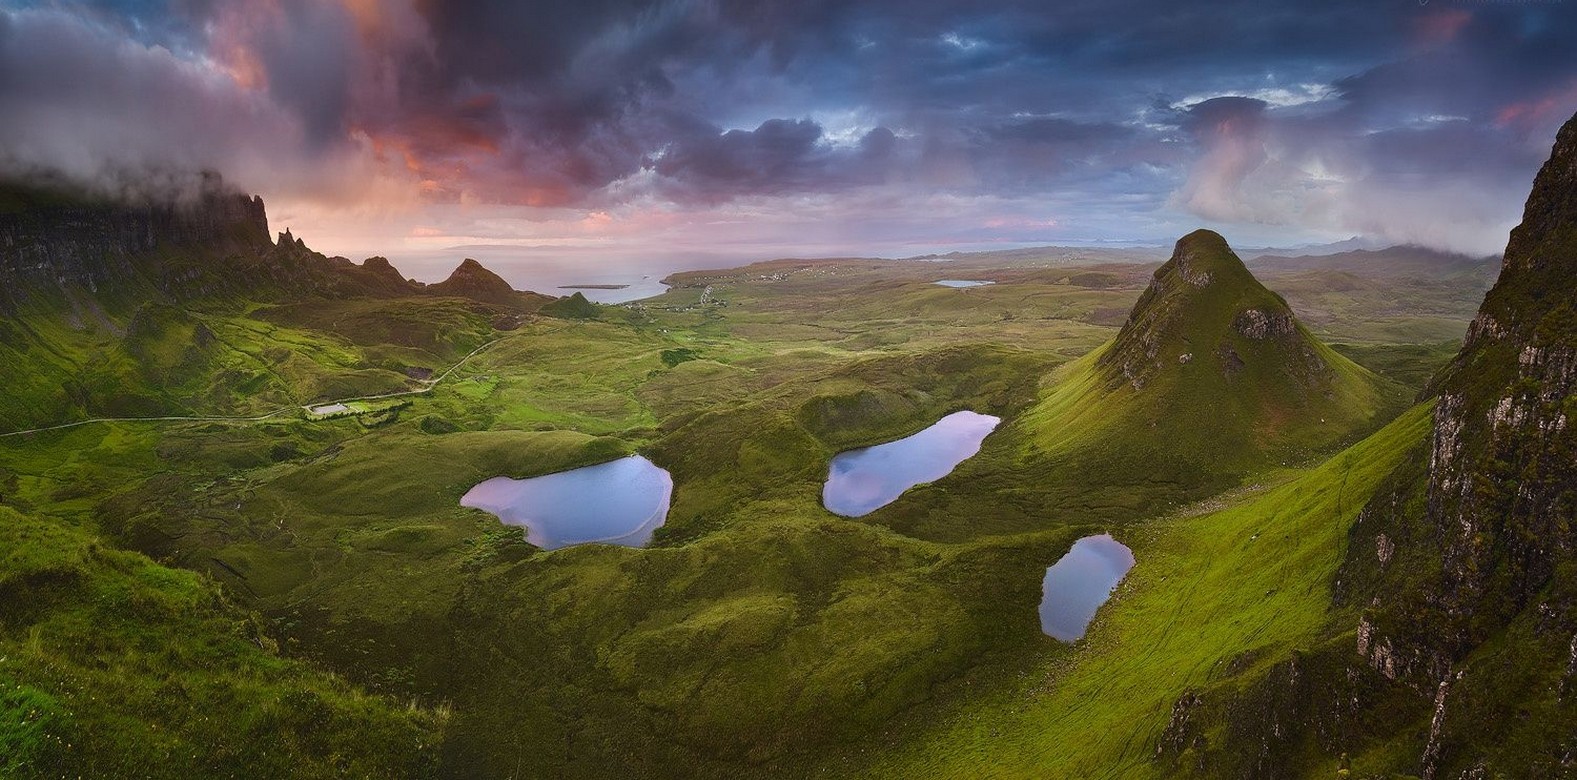 General 1577x780 landscape photography nature sunset hills lagoon grass cliff clouds sea island Skye Scotland